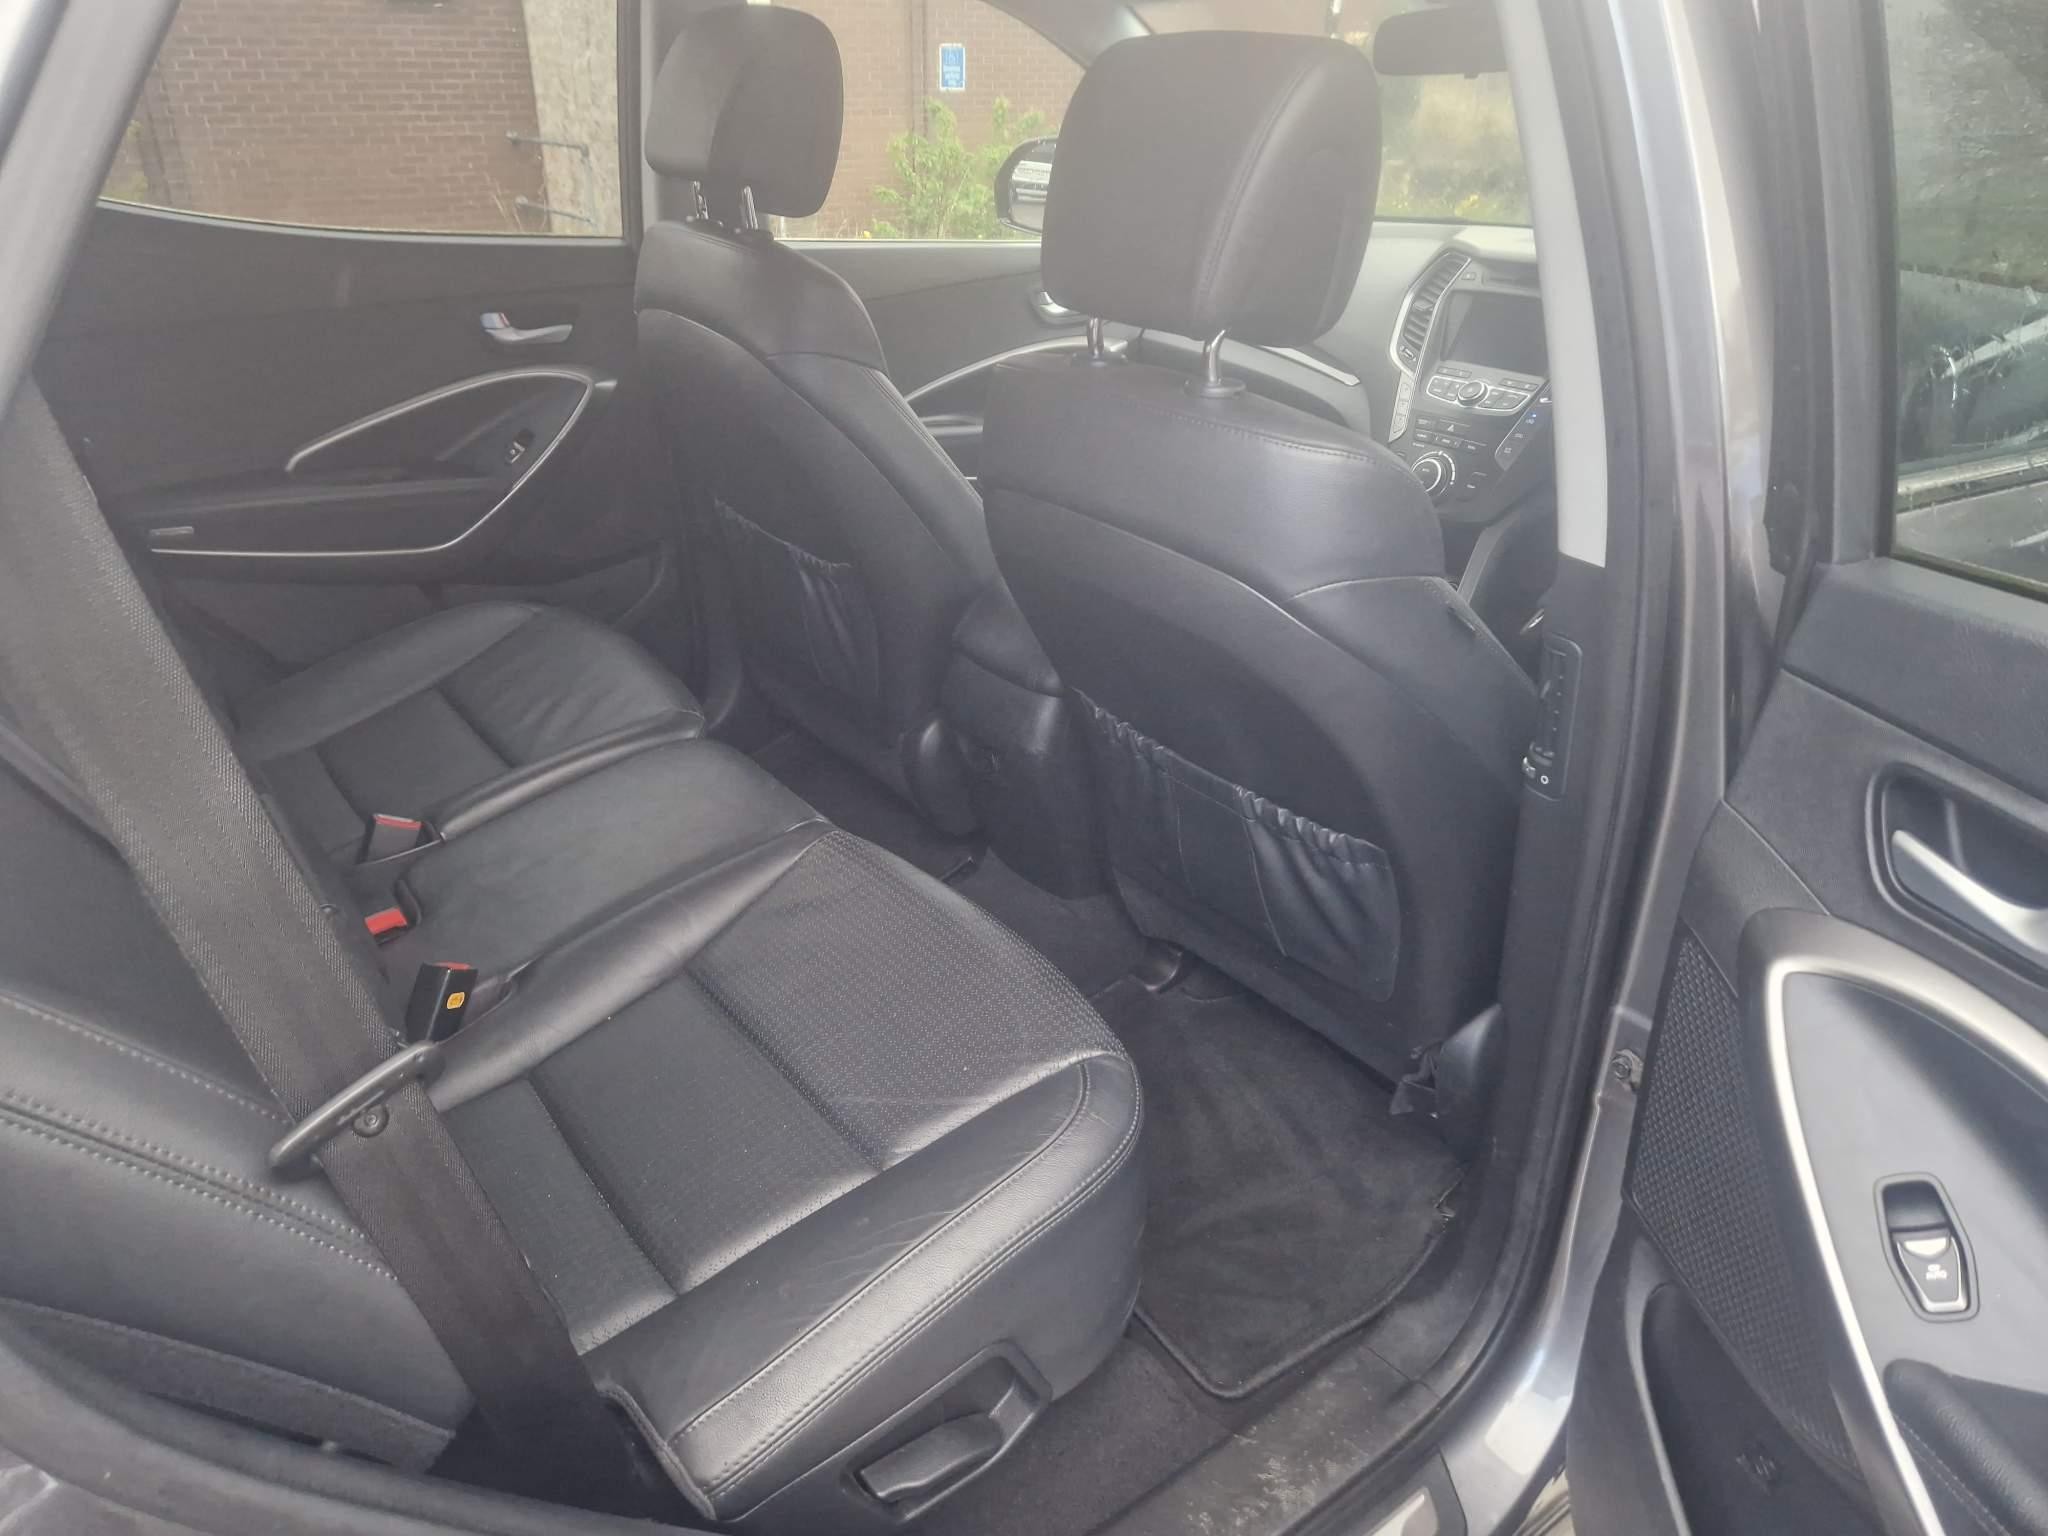 Hyundai SANTA FE 2.2 CRDi Premium SE 4WD Euro 5 5dr (7 seat) (SW14TFN) image 18